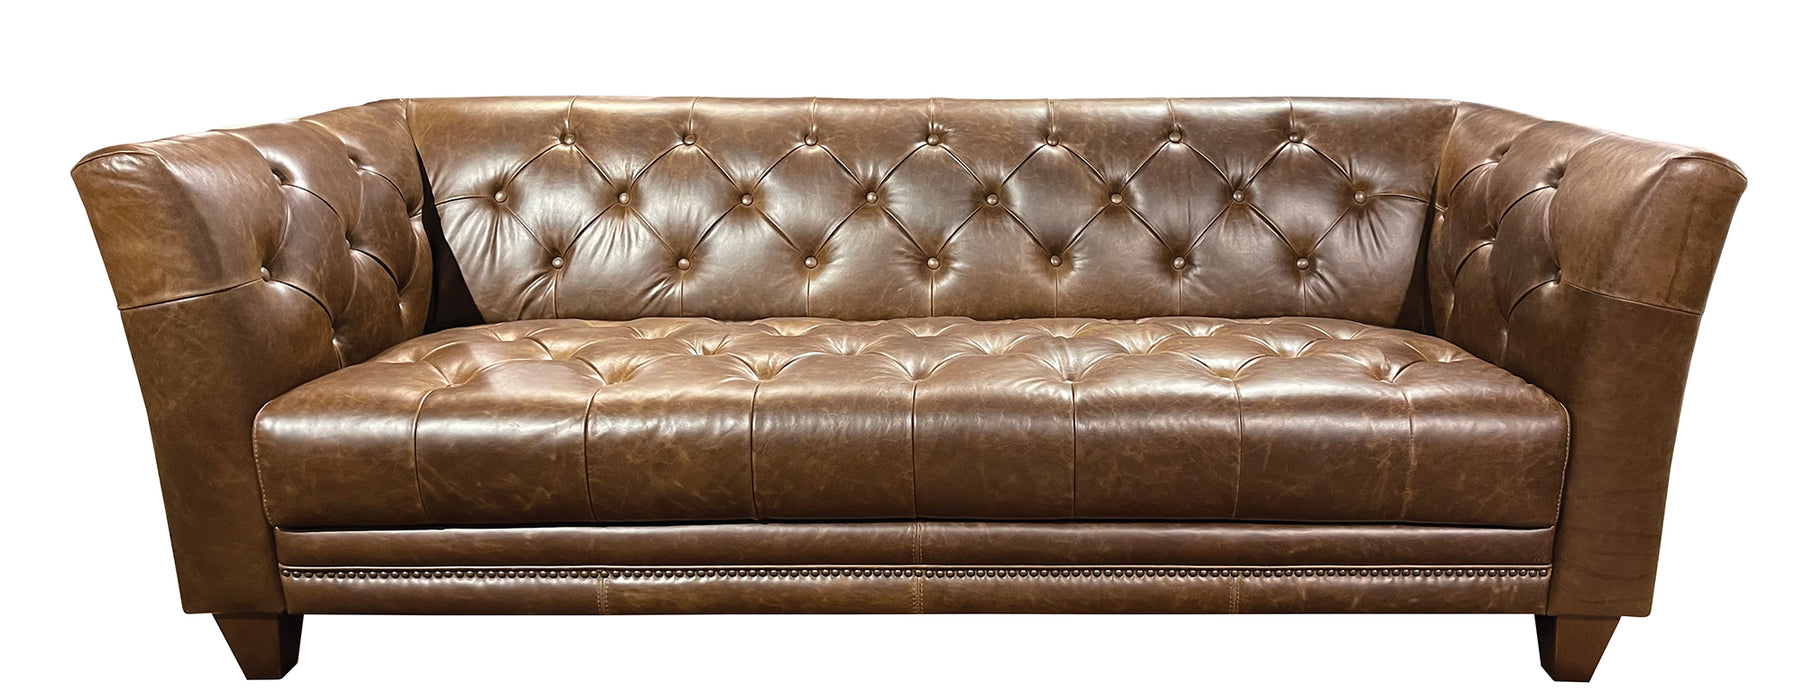 Mariano Italian Leather Furniture - Taylor Sofa in Rustica - TAYLOR-S